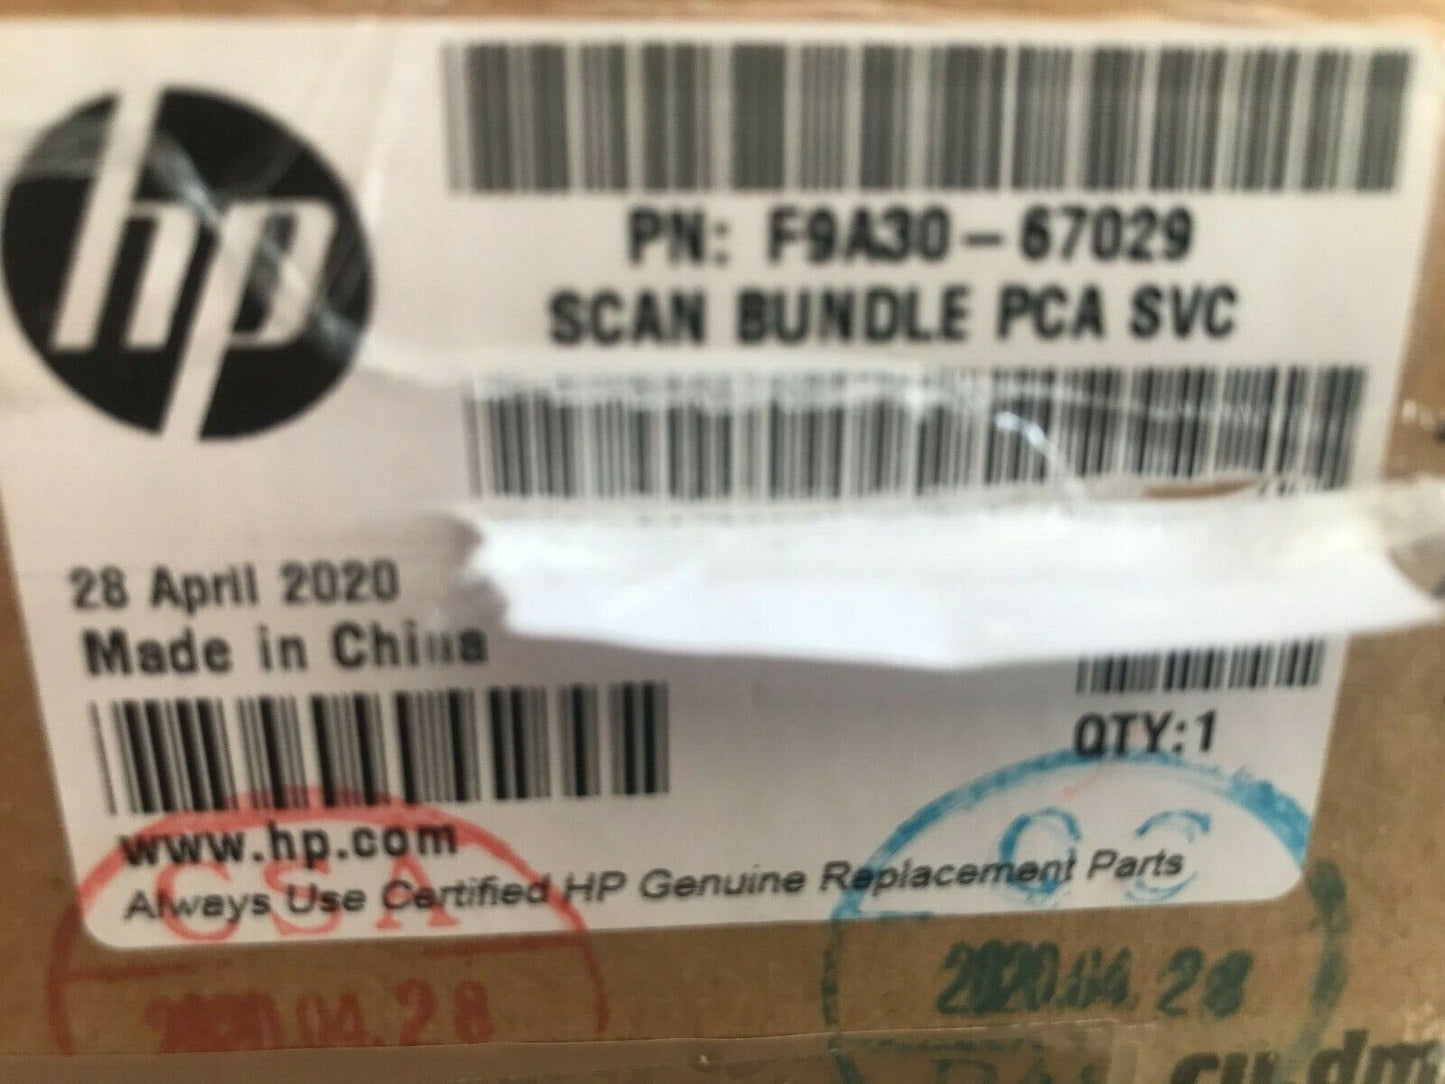 NEW HP F9A30-67029 Scan Bundle PCA SV kit DESIGNJET T830